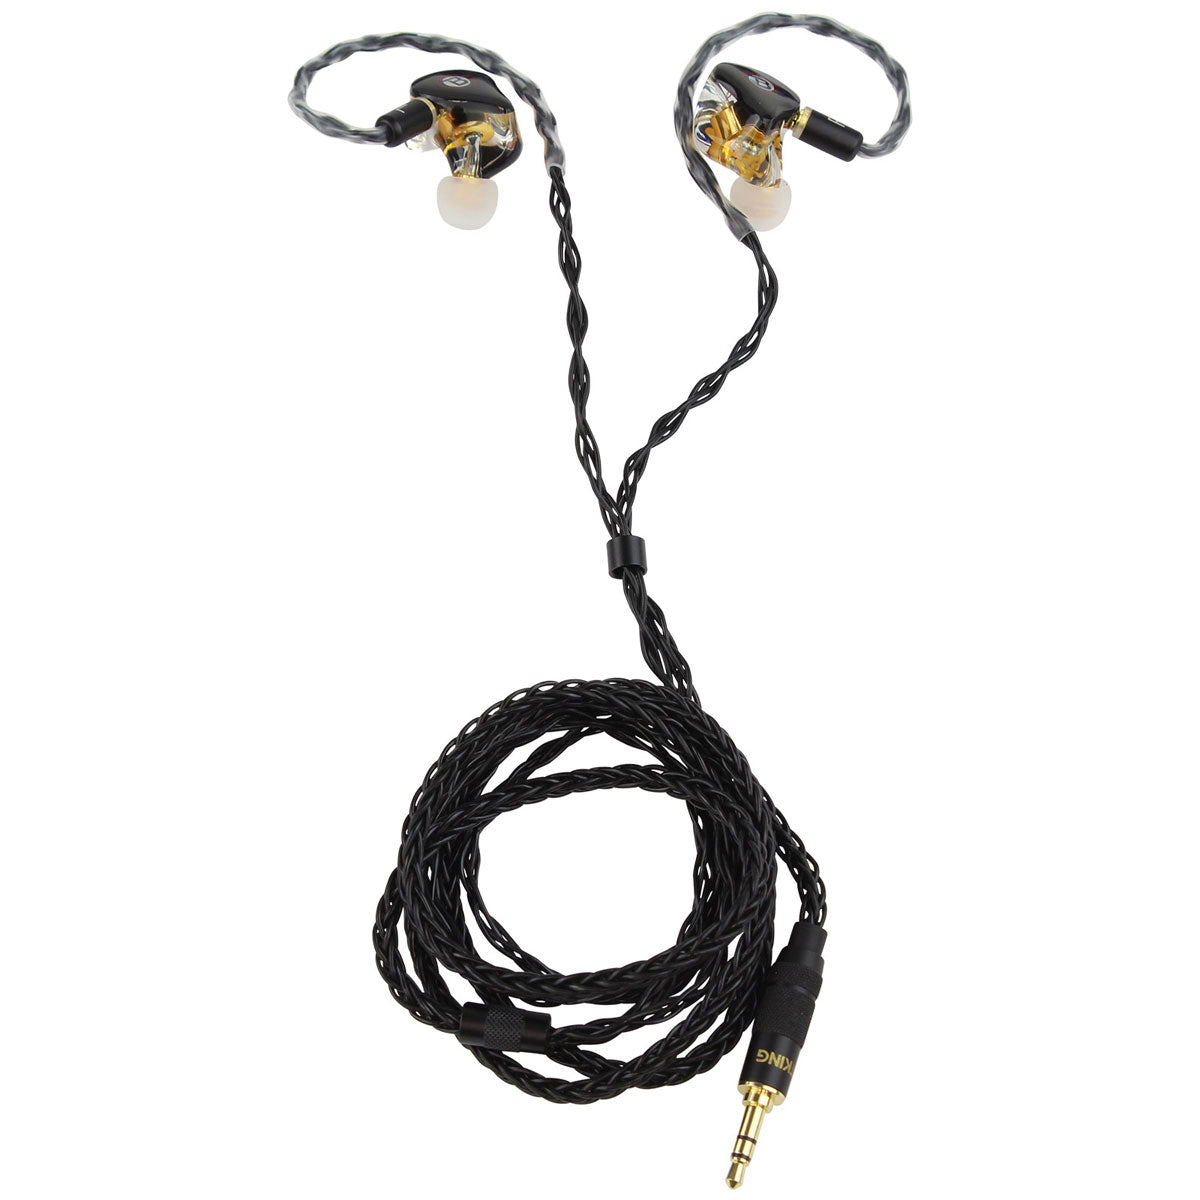 Blastking EARBUDS-8017-BLK Professional In-Ear Monitors - Black